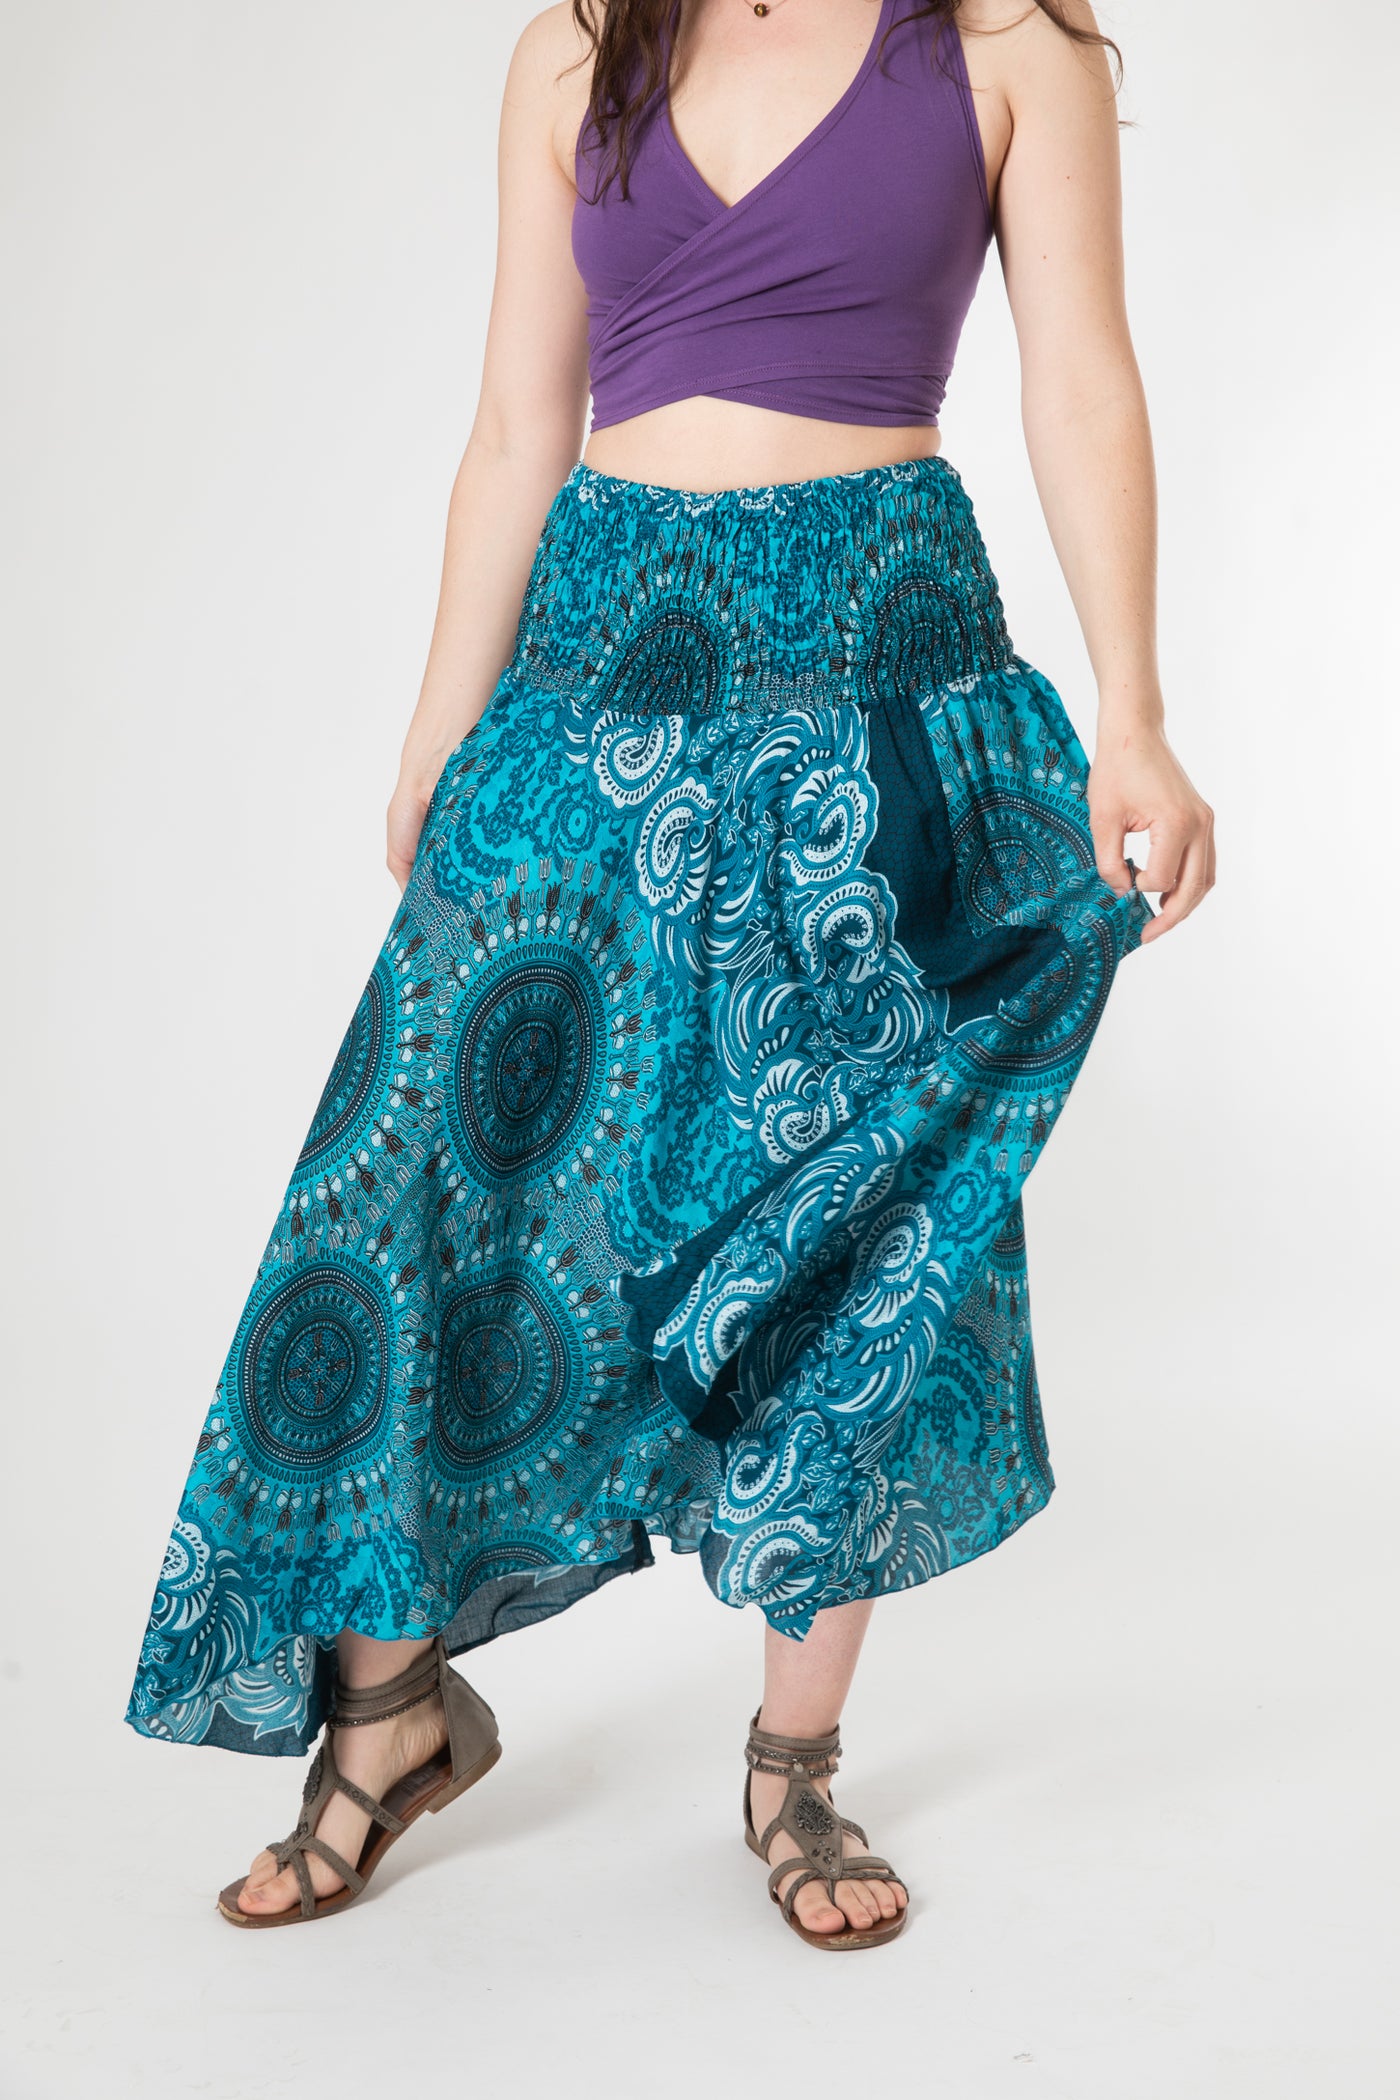 Mandala Convertible Skirt Top